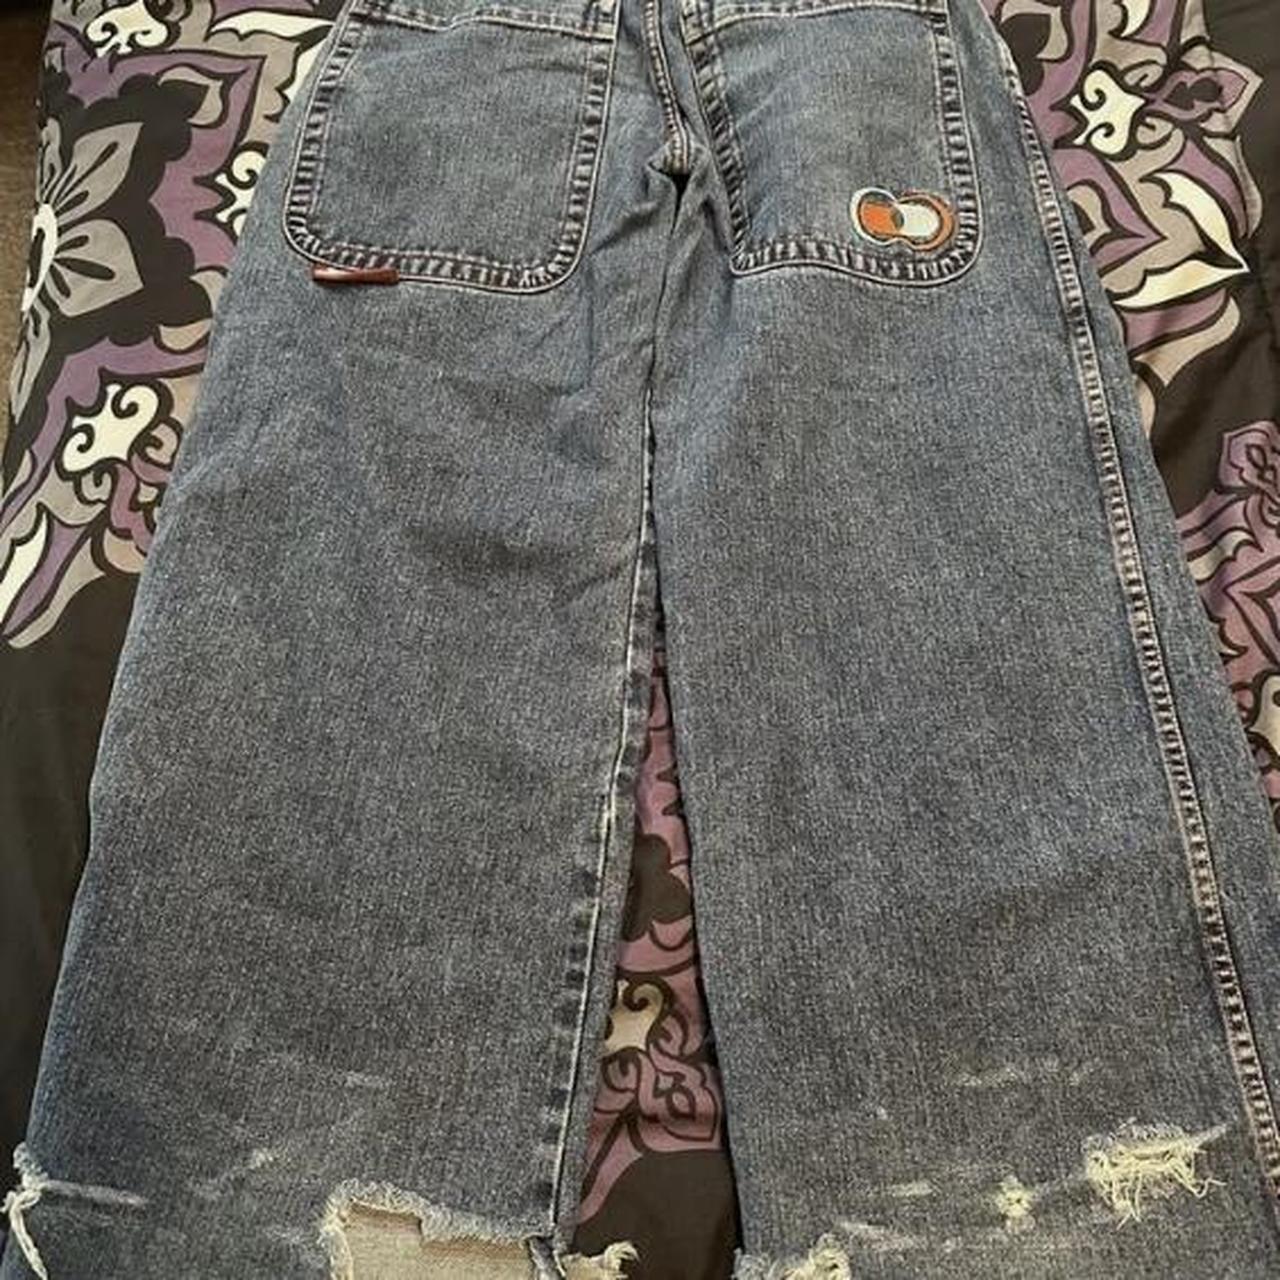 Vintage JNCO streetwear jeans 😎 embroidery on back... - Depop